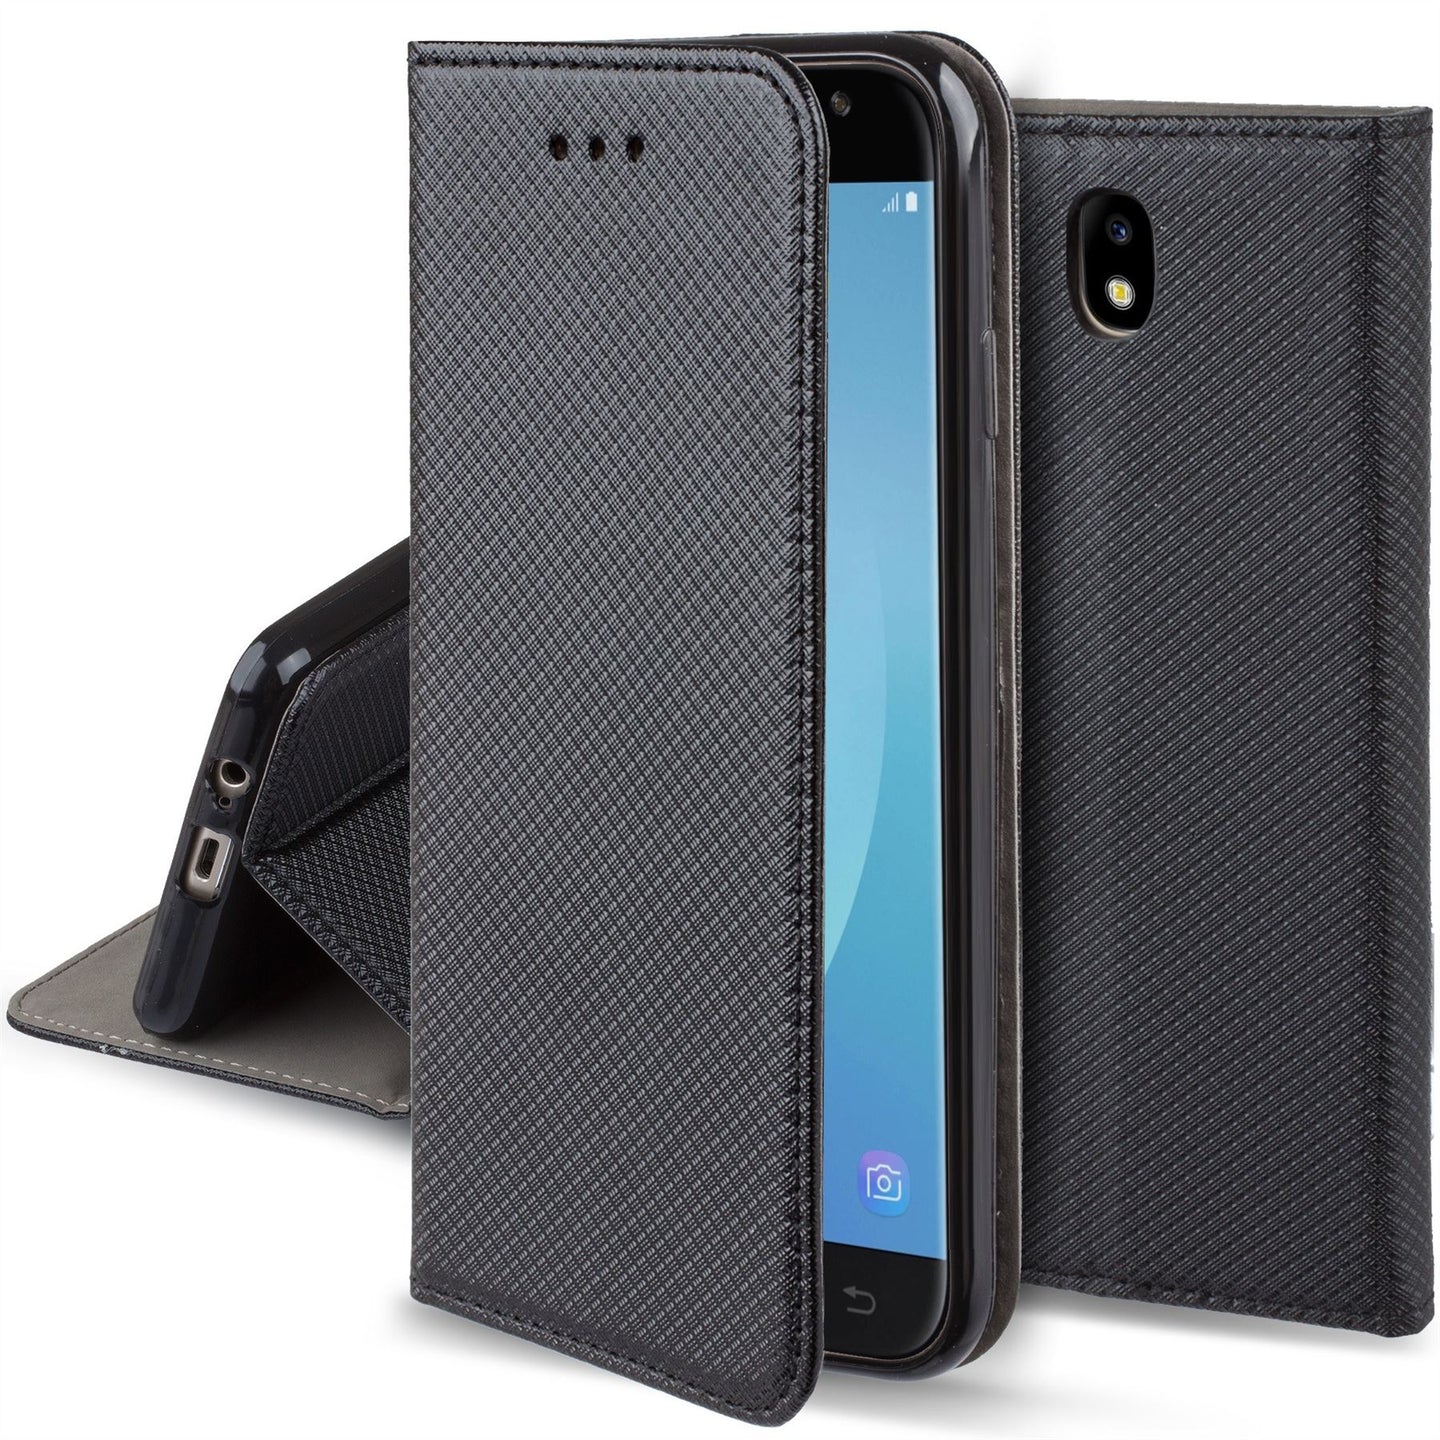 Moozy Case Flip Cover for Samsung J3 2017, Black - Smart Magnetic Flip Case with Card Holder and Stand